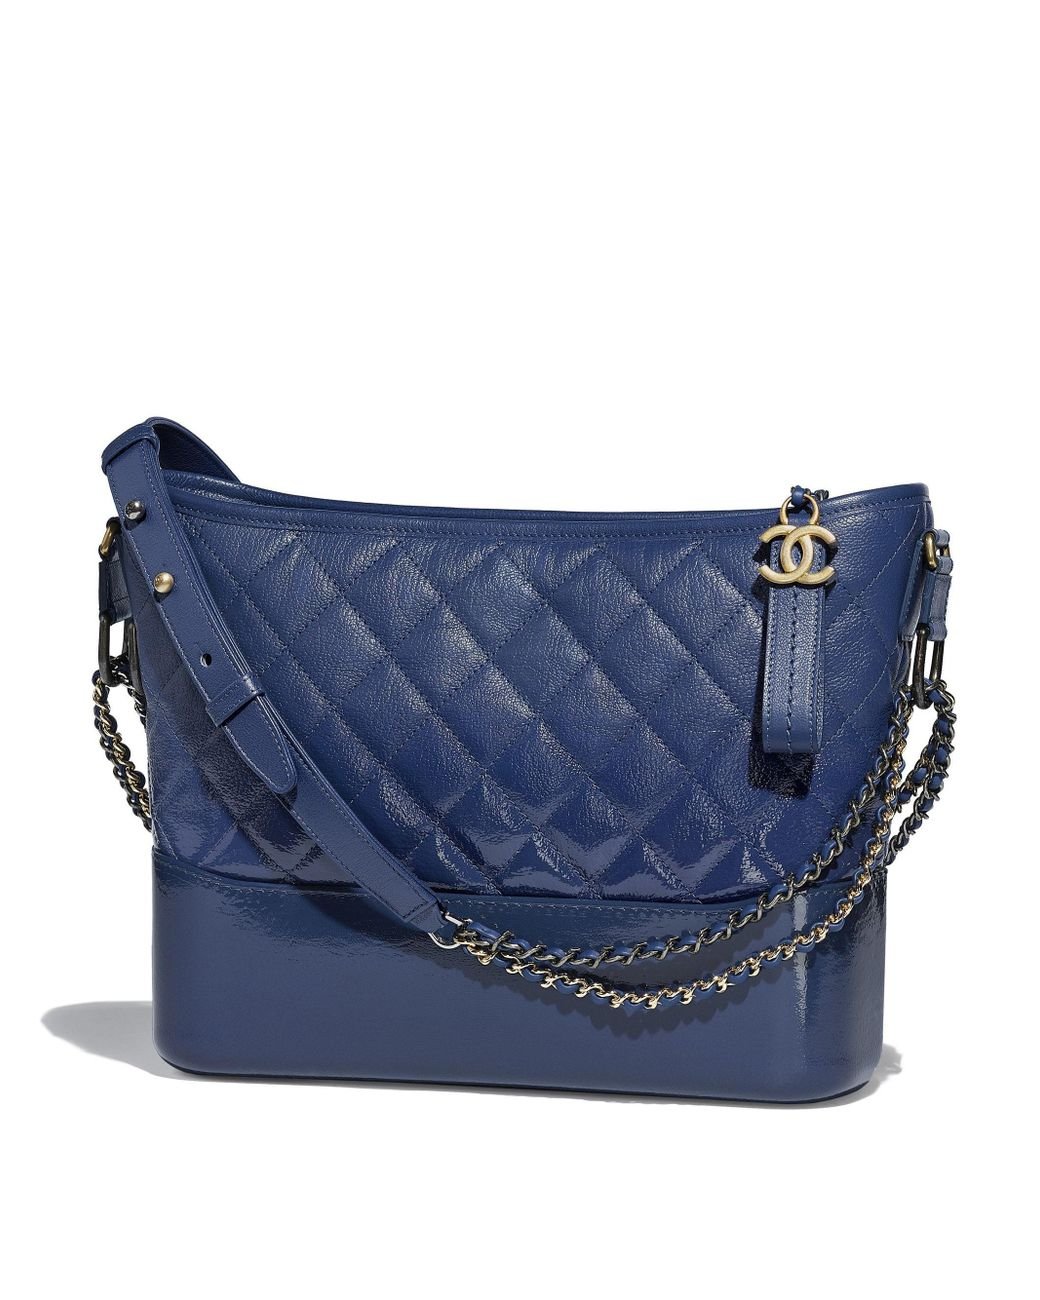 Chanel 's Gabrielle Hobo Bag in Blue